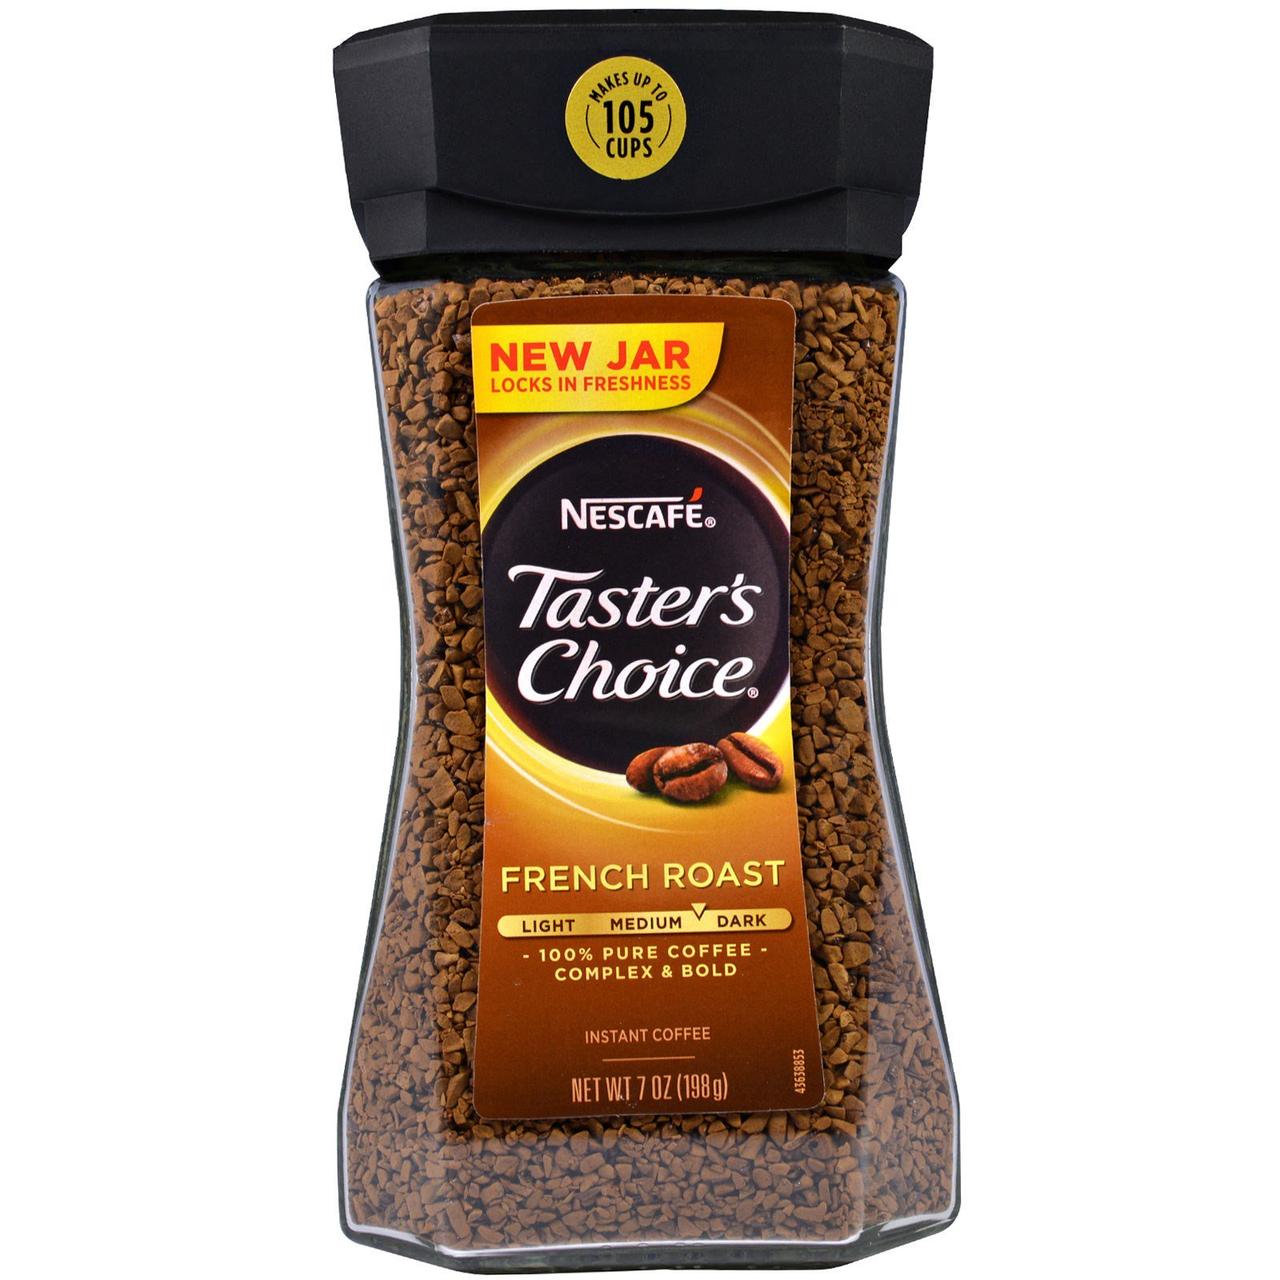 Nescafé, taster's Choice, Instant Coffee, French Roast, 7 oz (198 g) Тестер Чойс, розчинна кава, французької